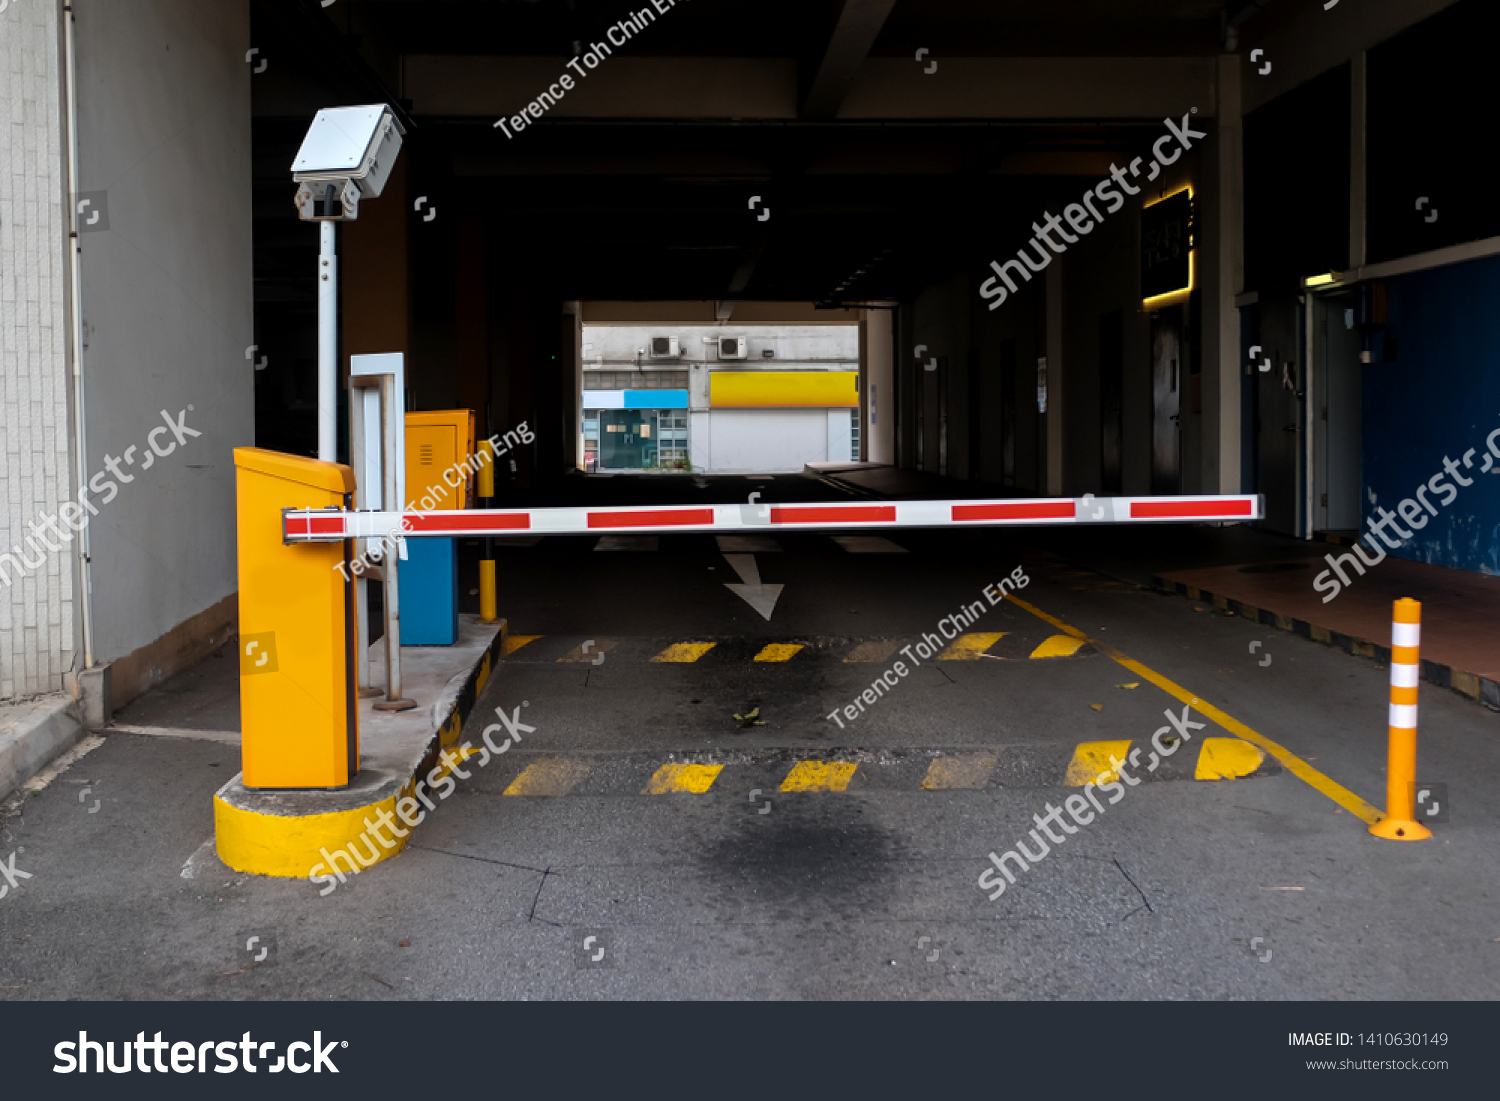 10,235 Pole gate Images, Stock Photos & Vectors | Shutterstock